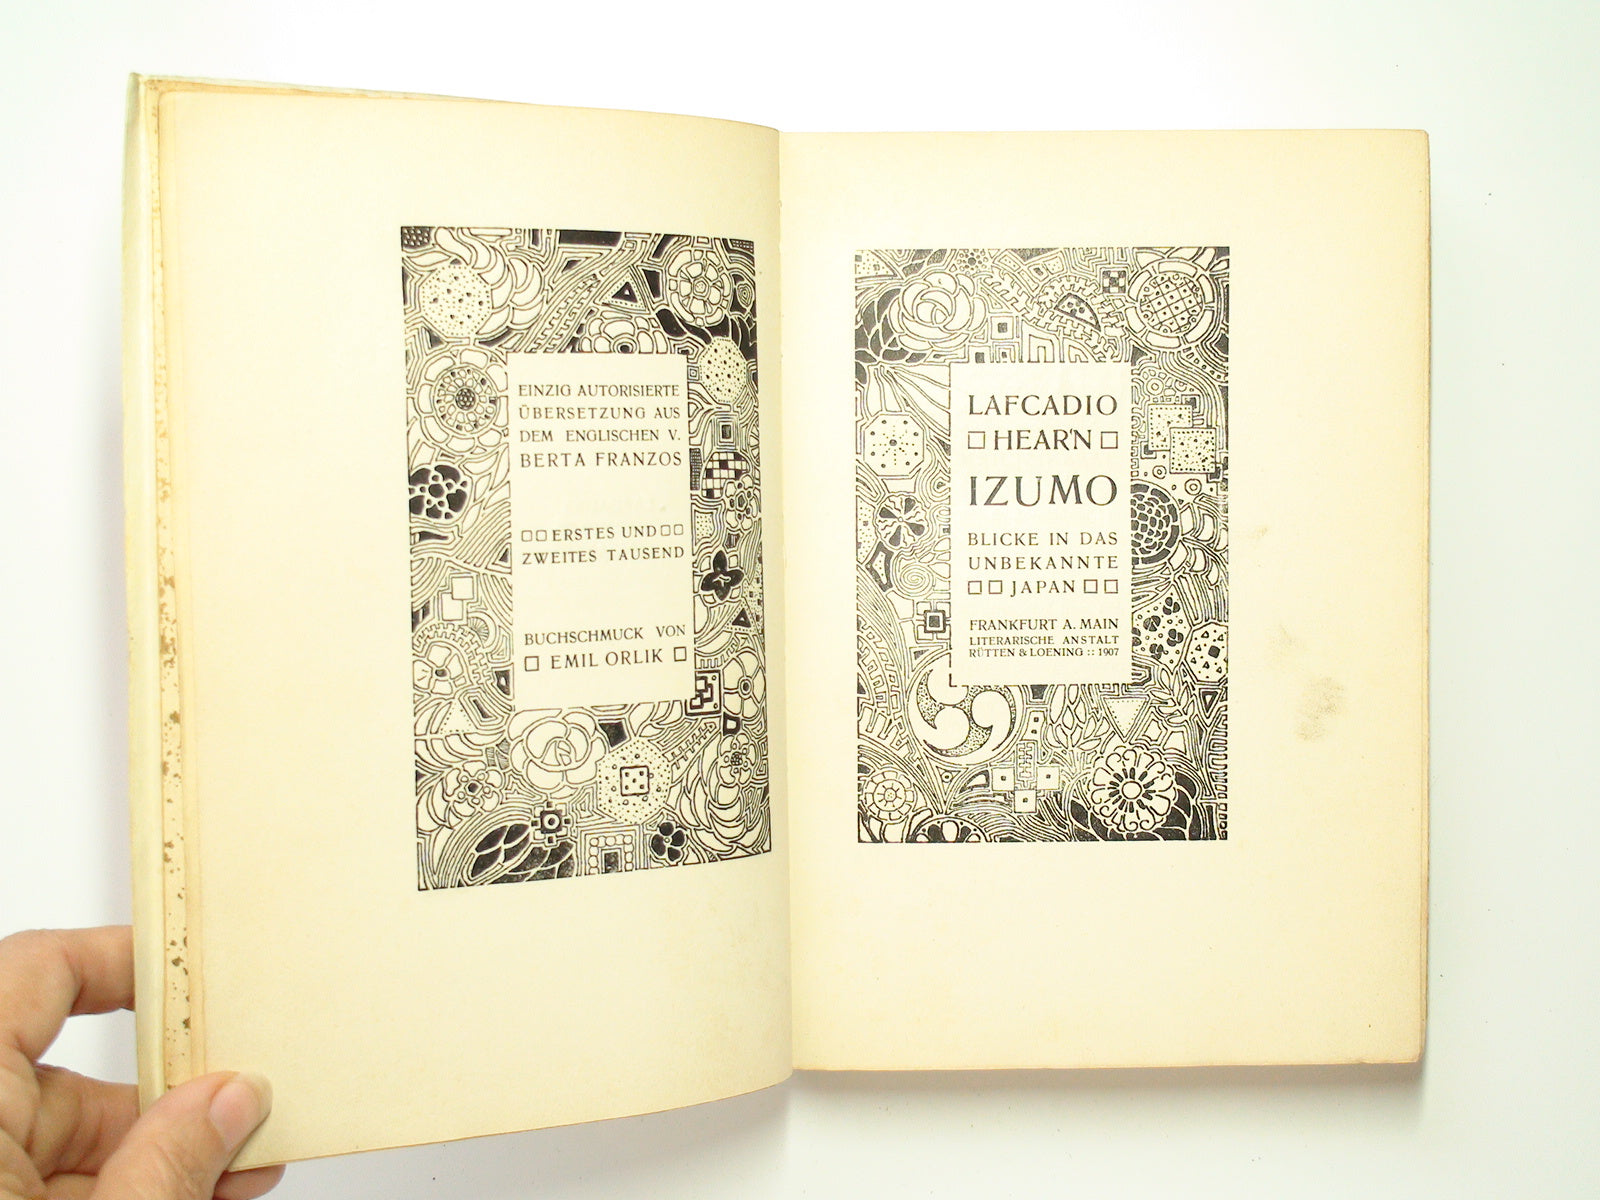 Izumo, Blicke in das unbekannte Japan. Lafcadio Hearn, German Language, Illustrated, 1st Ed, 1907